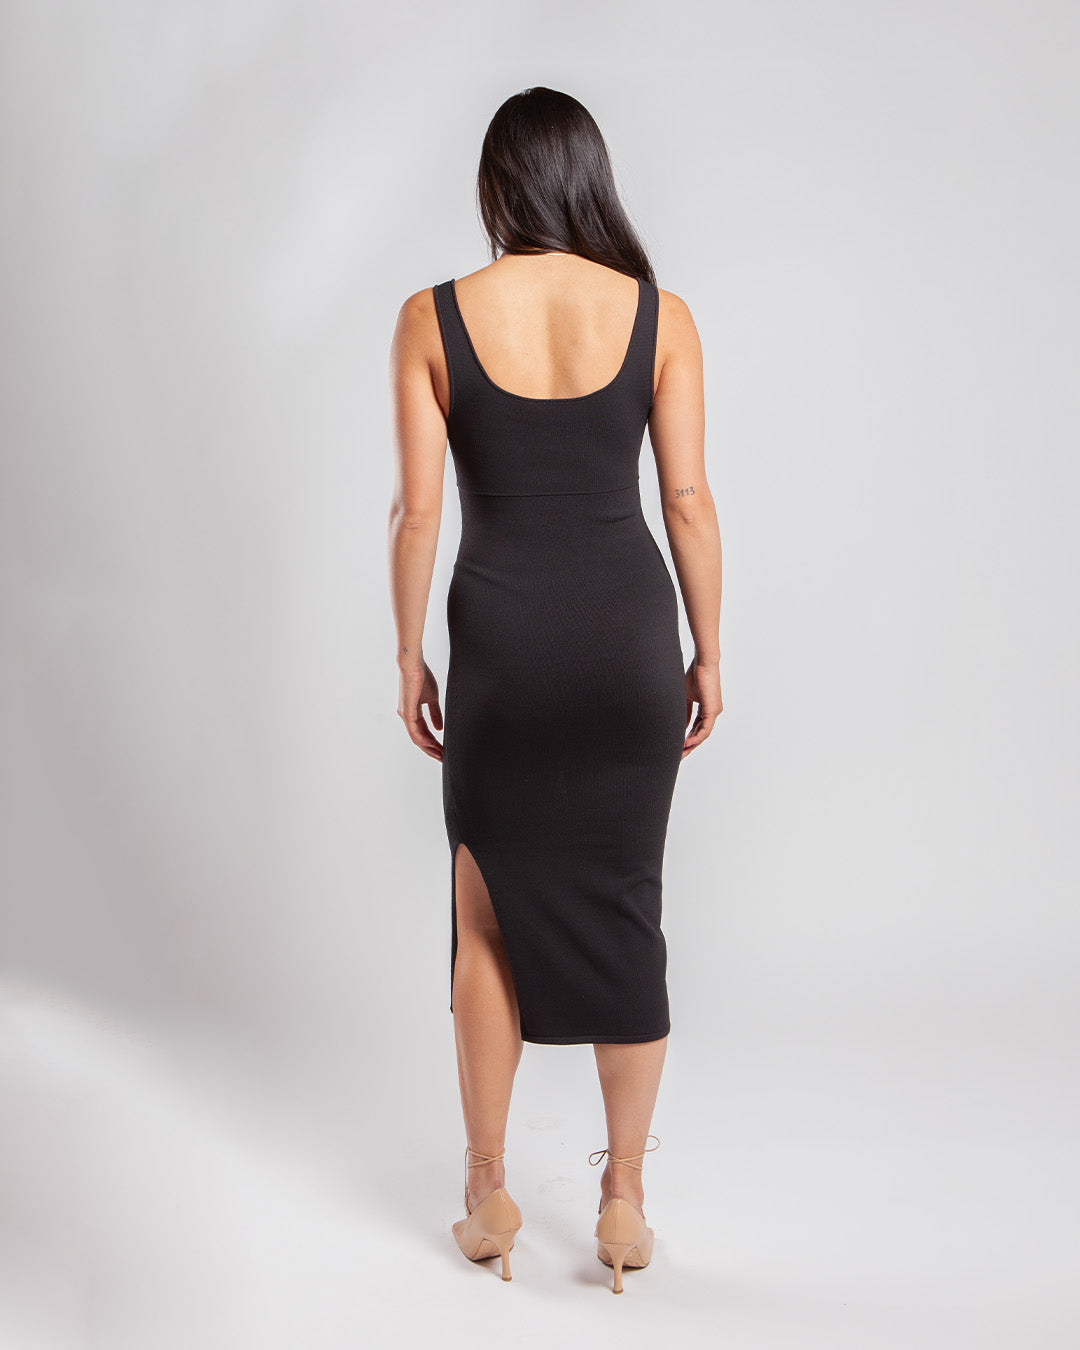 Maha - Calvin Klein Sensual Knitted Bodycon Dress Black